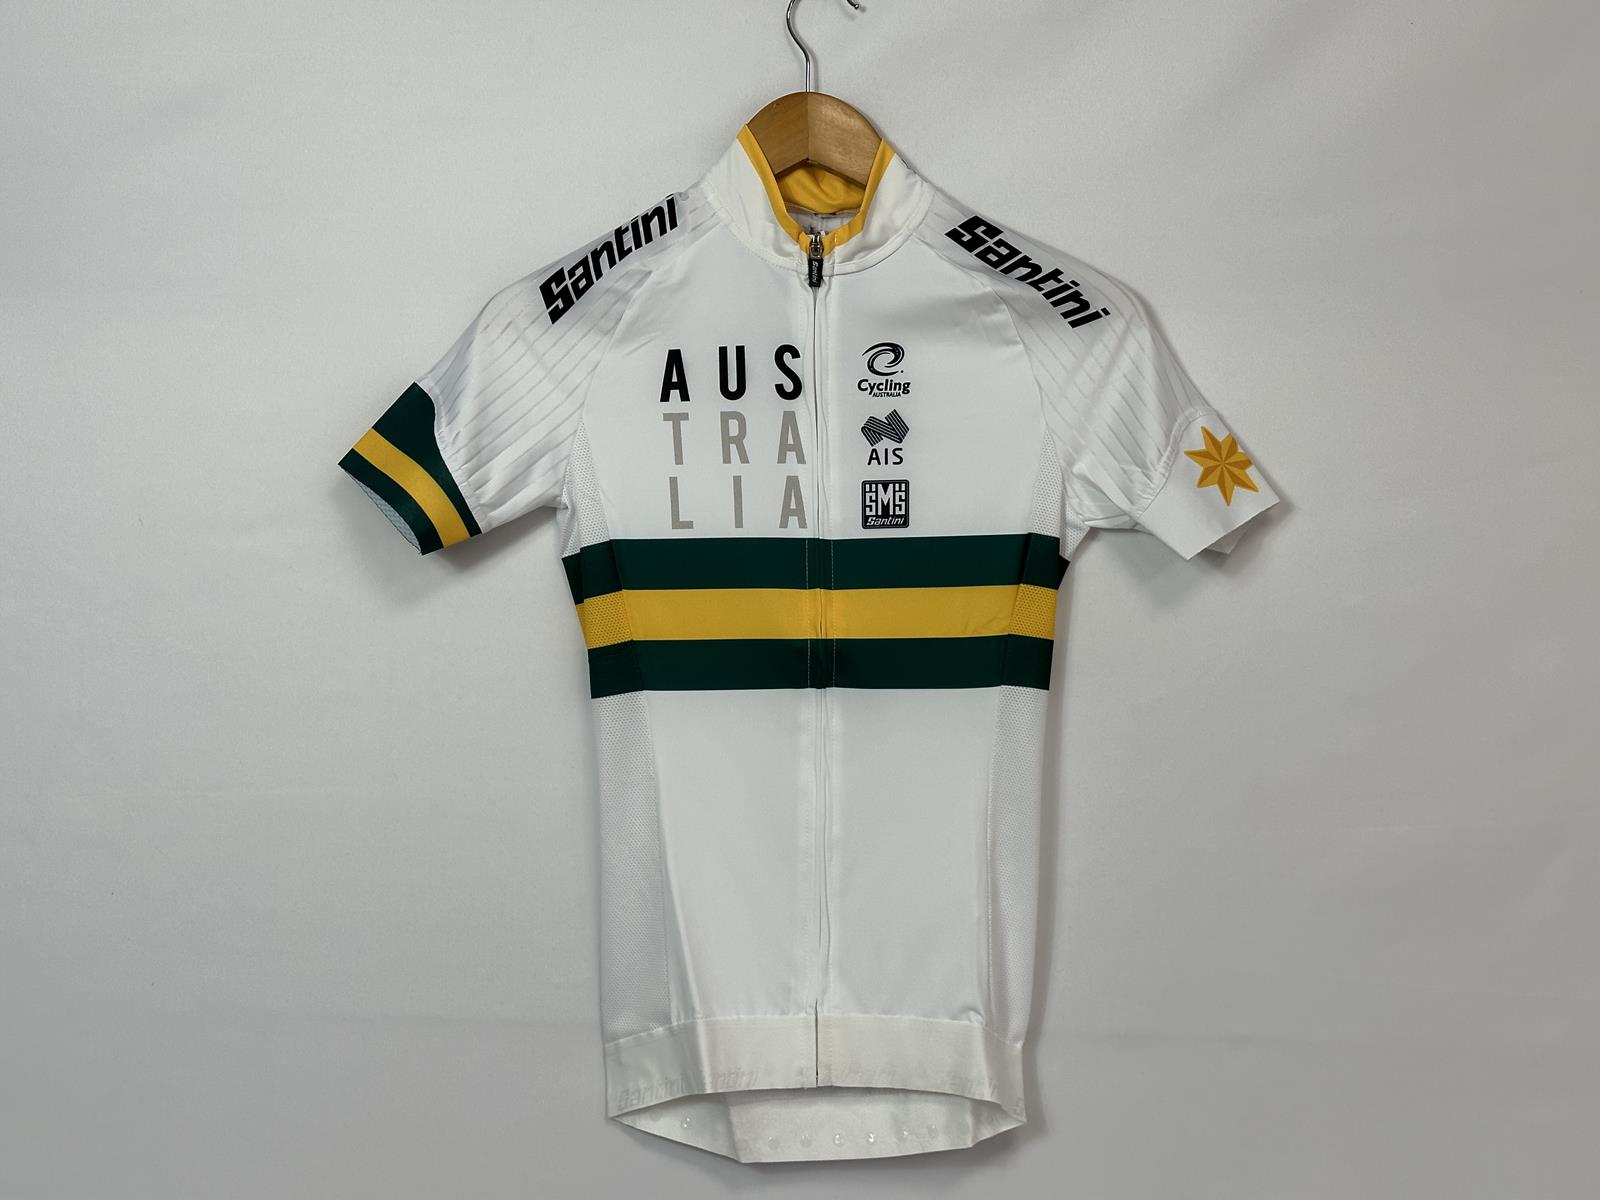 Maglia Sleek Plus Aero dell'Australian Cycling Team